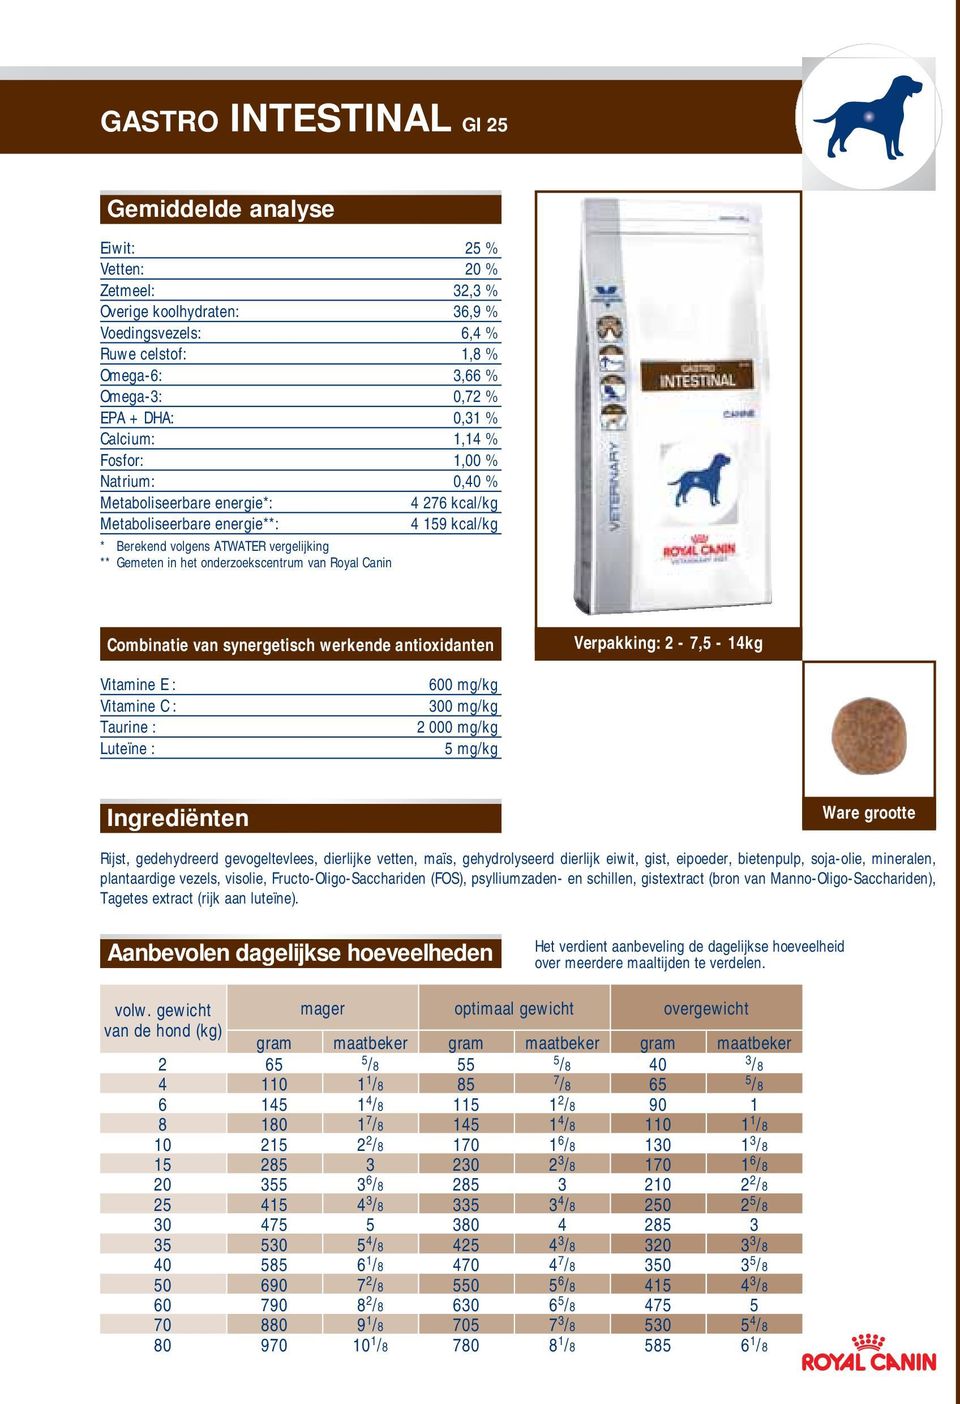 onderzoekscentrum van Royal Canin Combinatie van synergetisch werkende antioxidanten Verpakking: 2-7,5-14kg Vitamine E : Vitamine C : Taurine : Luteïne : 600 mg/kg 300 mg/kg 2 000 mg/kg 5 mg/kg